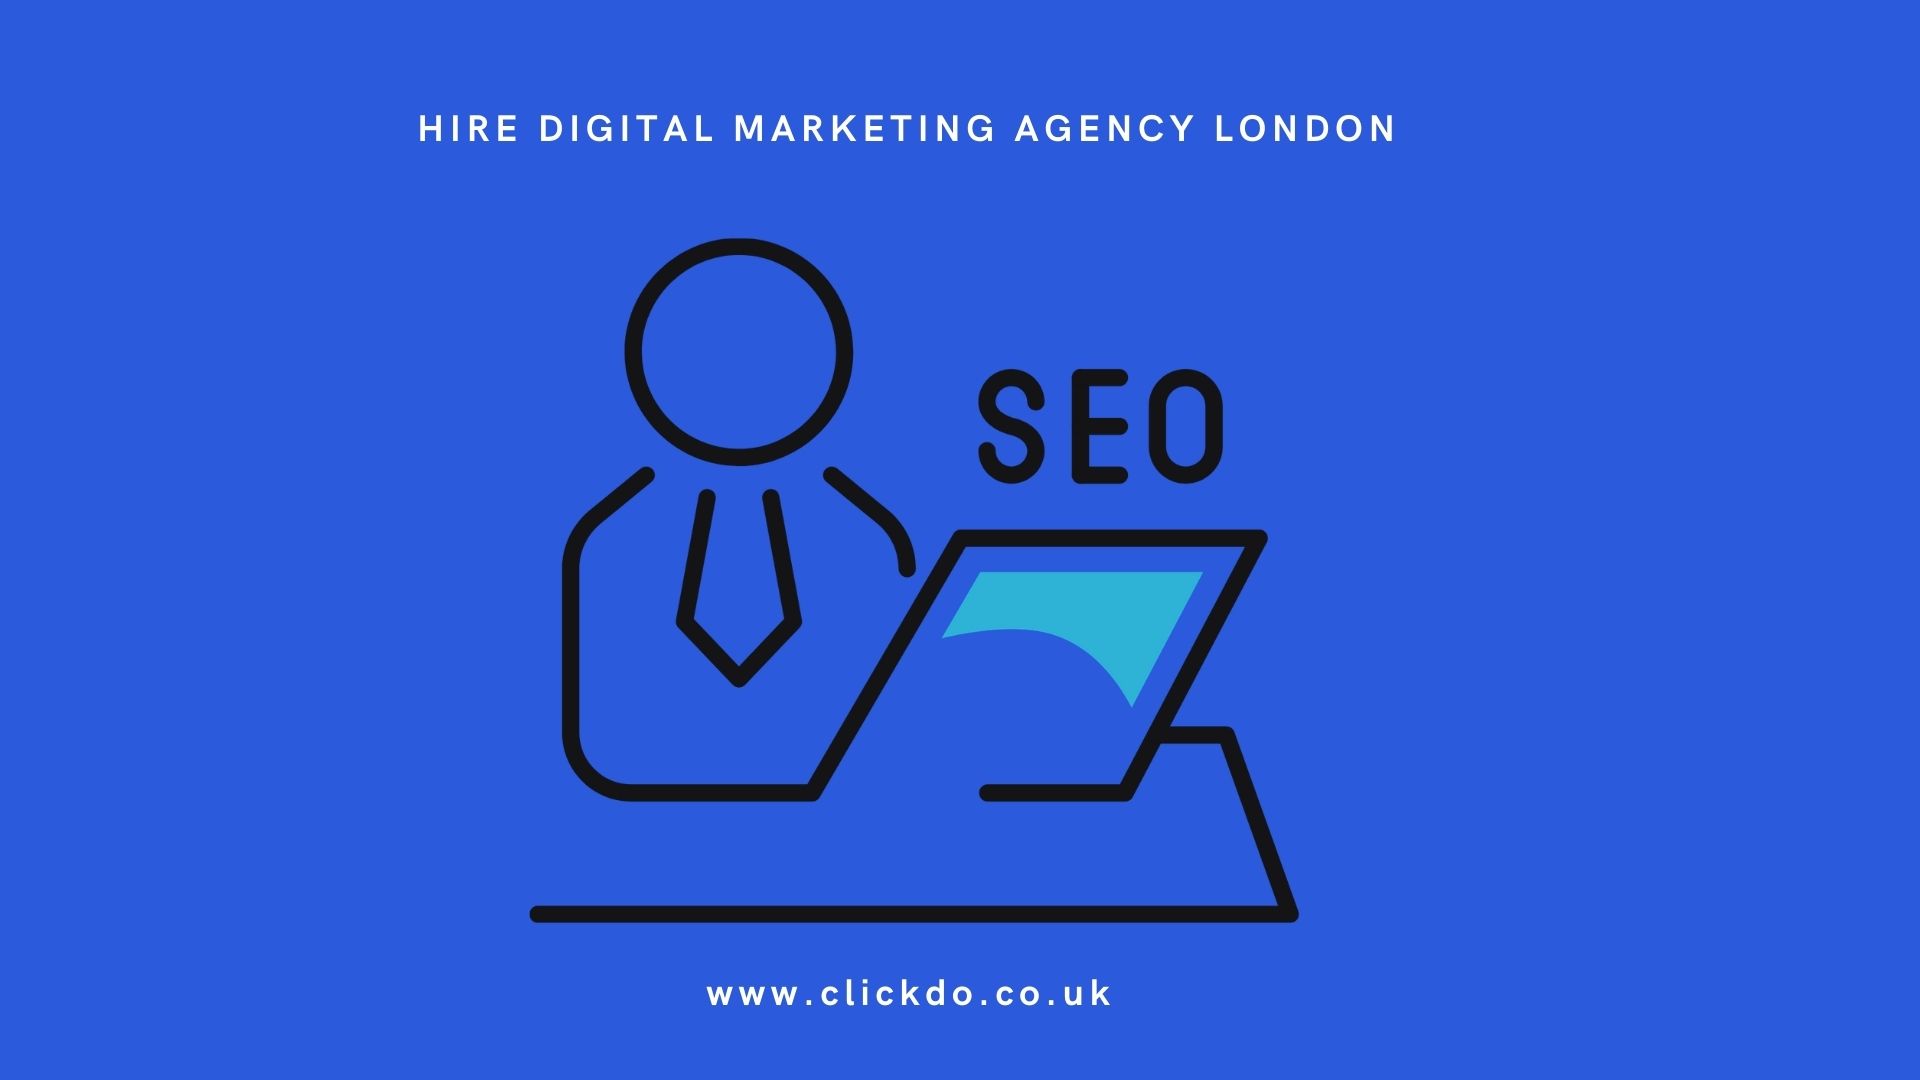 Hire Digital marketing agency London